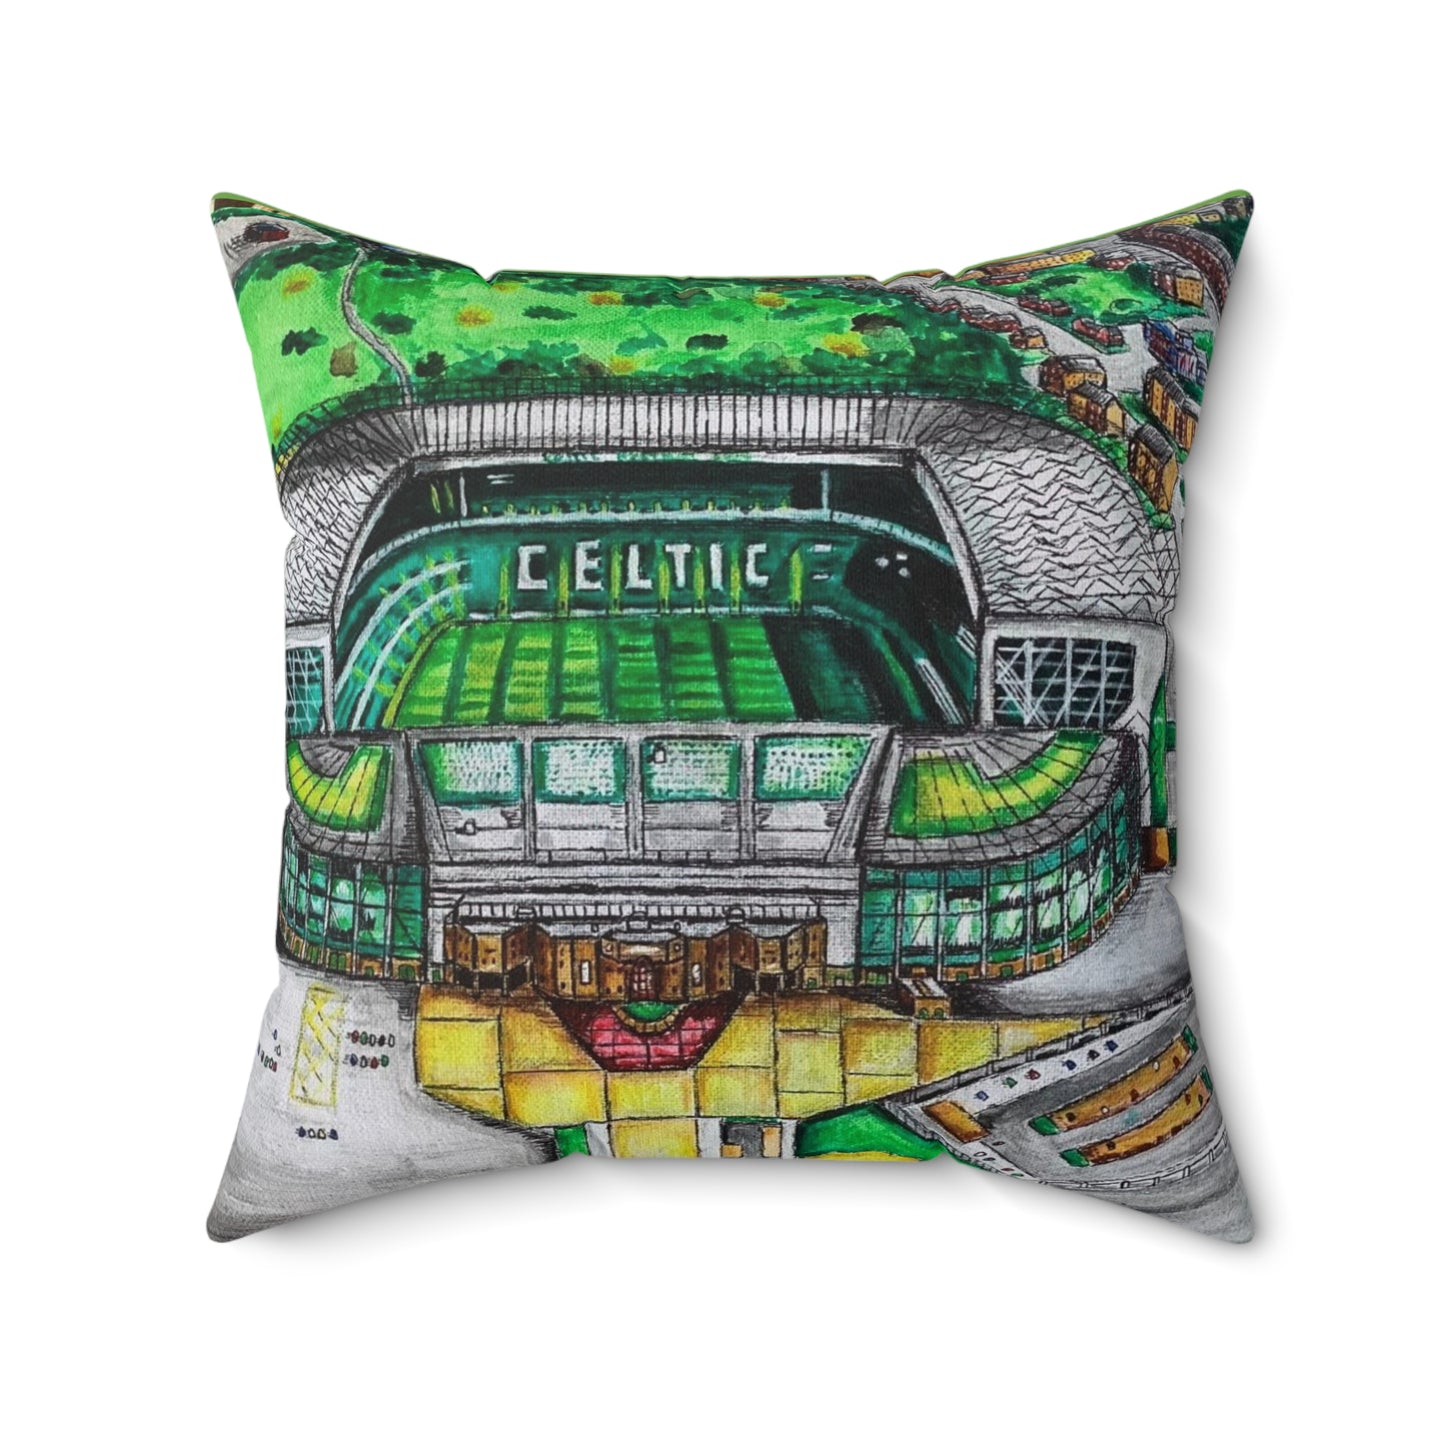 Indoor decorative cushion- Celtic Park